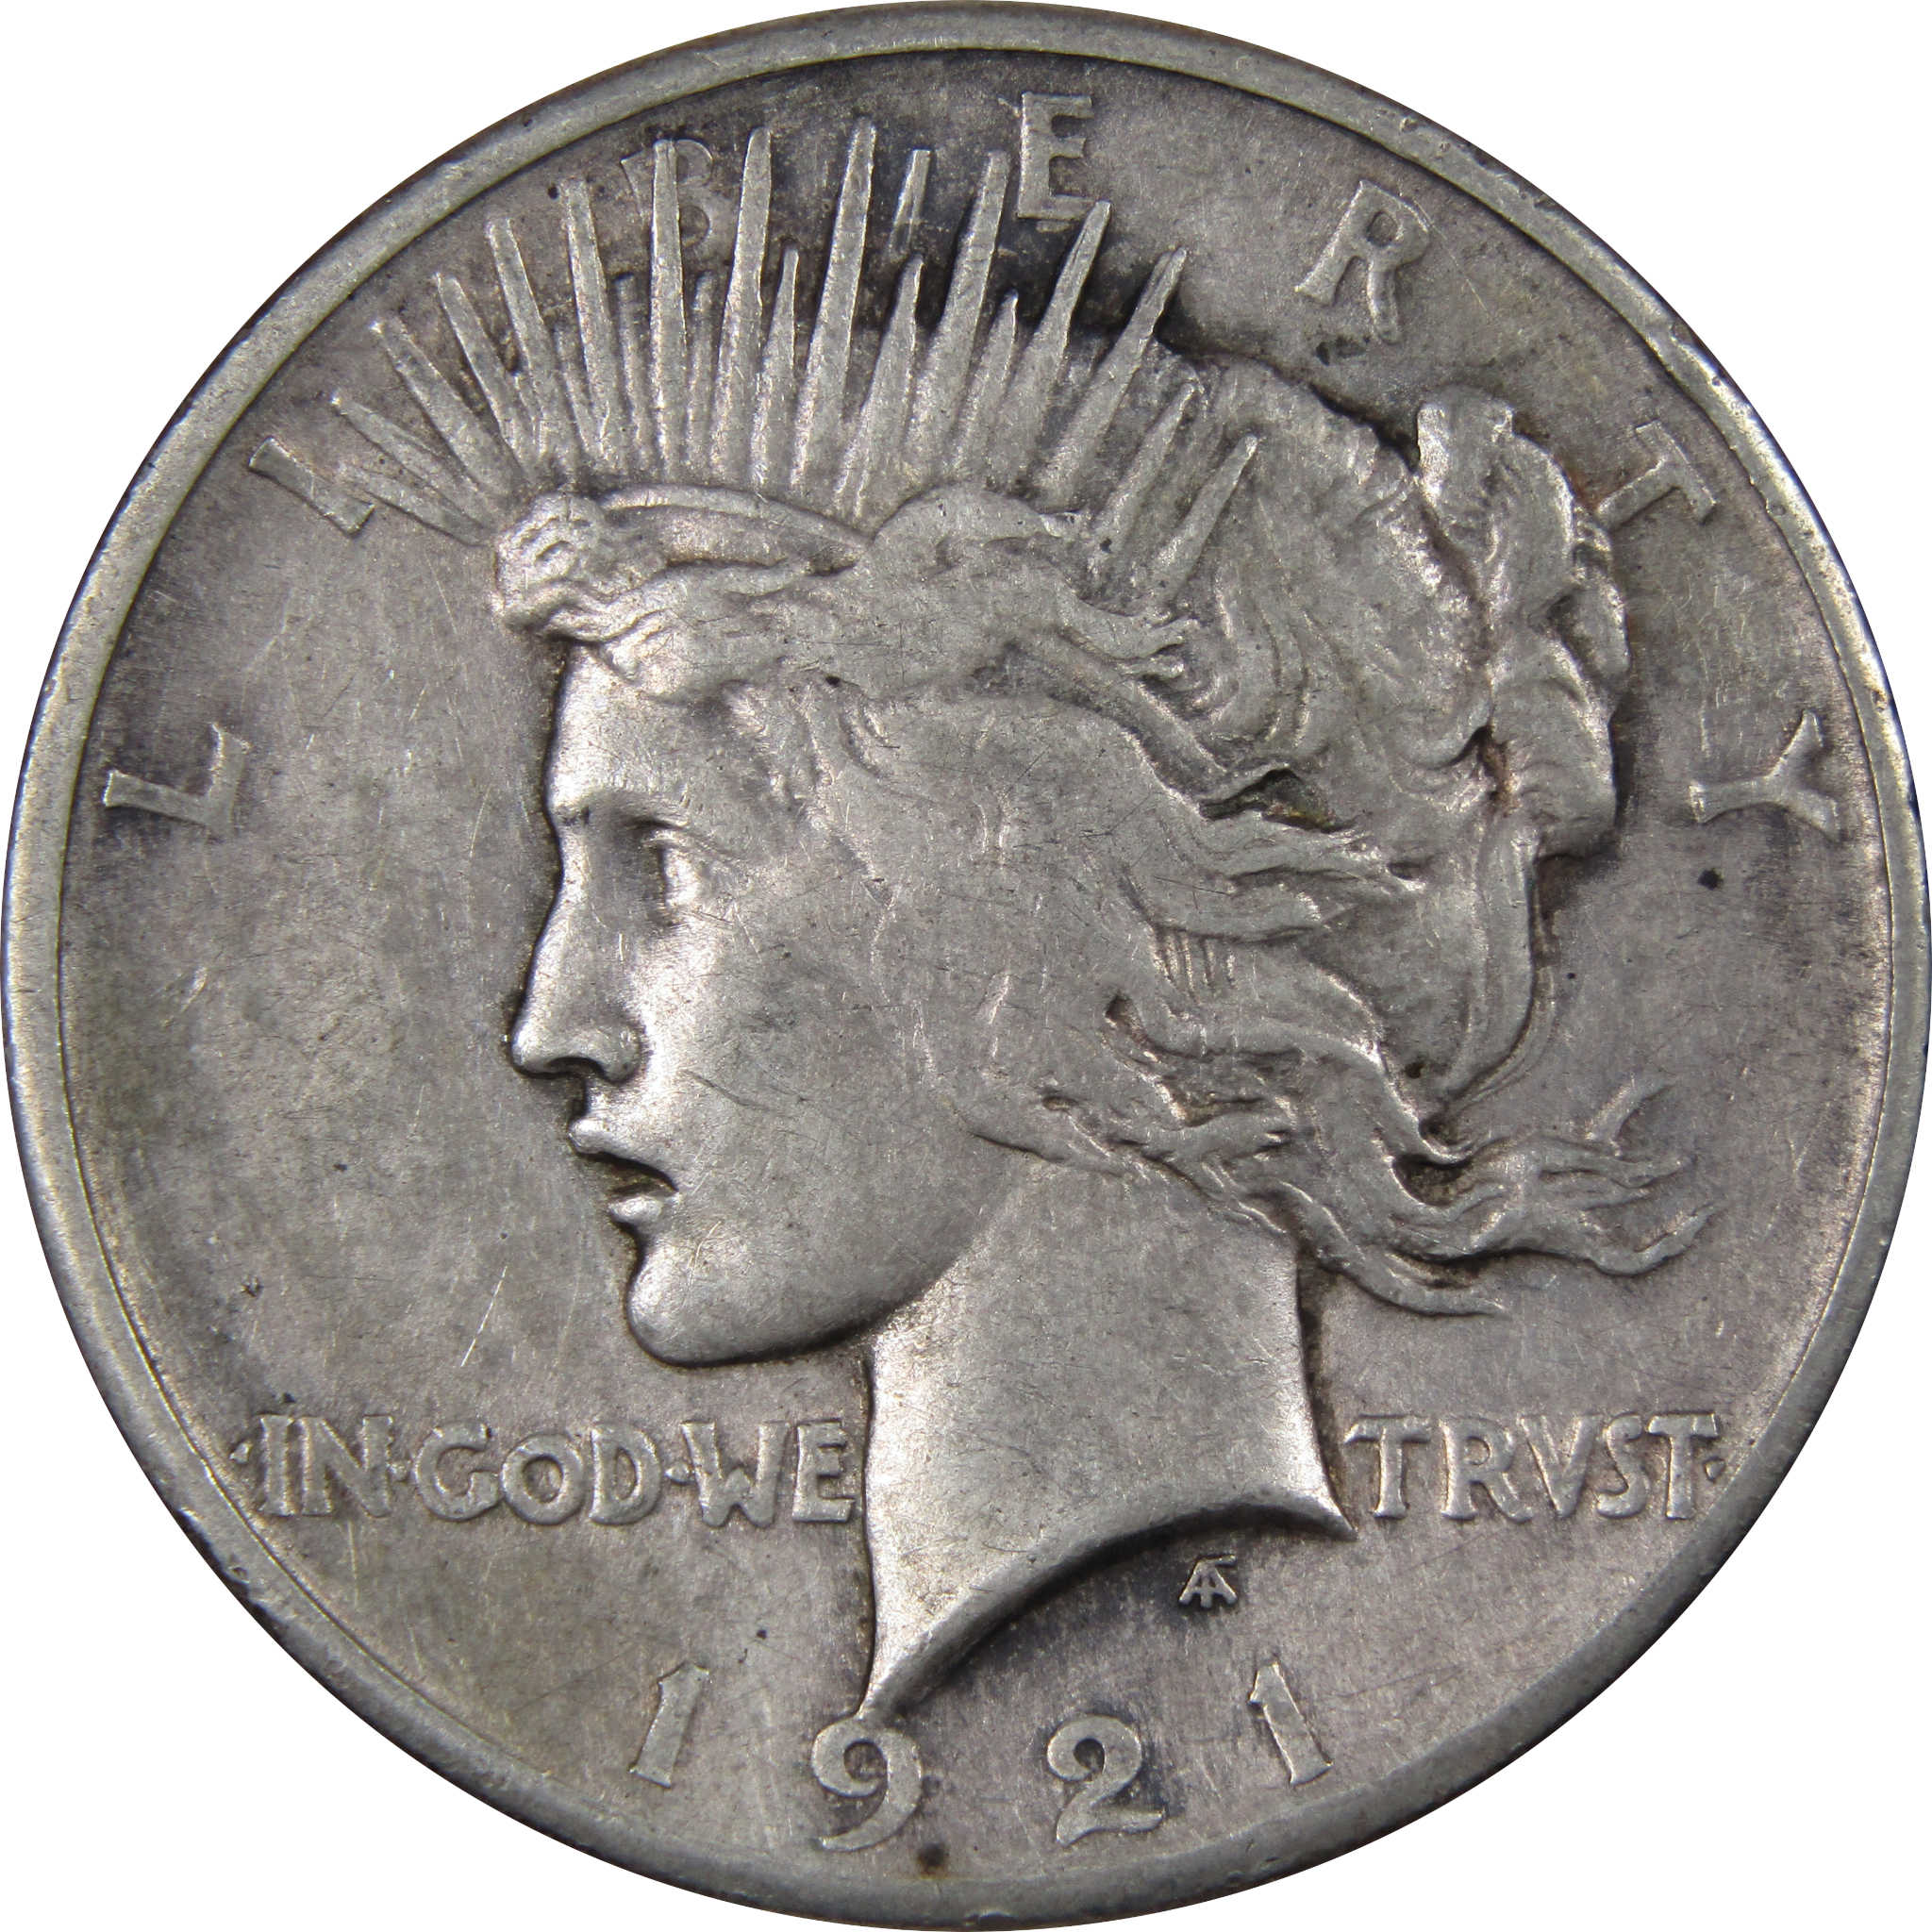 1921 High Relief Peace Dollar VF Very Fine 90% Silver Coin SKU:IPC8531